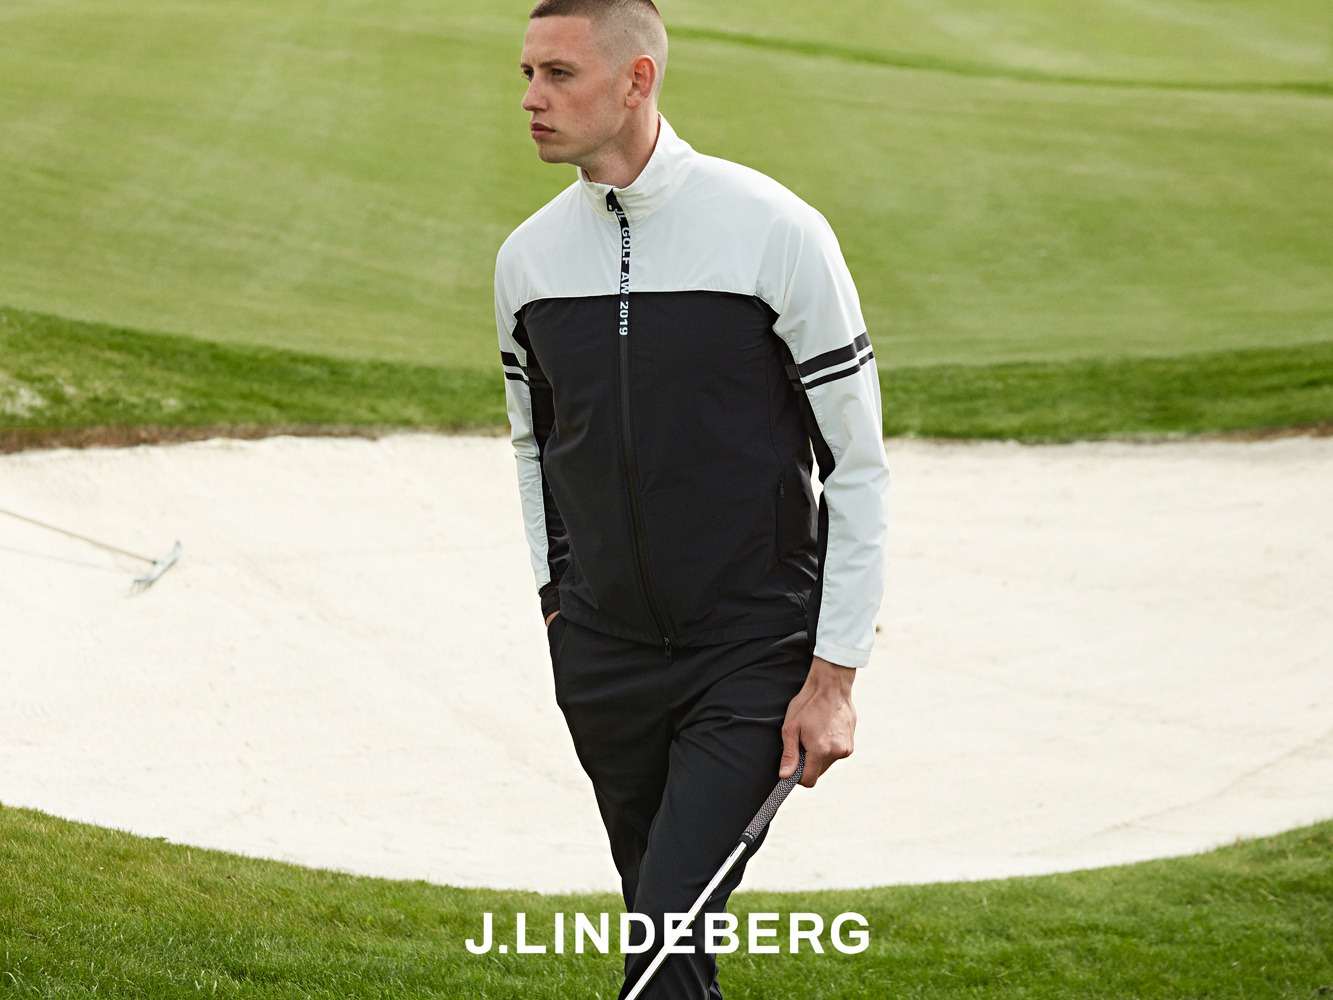 J Lindeberg Golf 8 by Pelle LANNEFORS